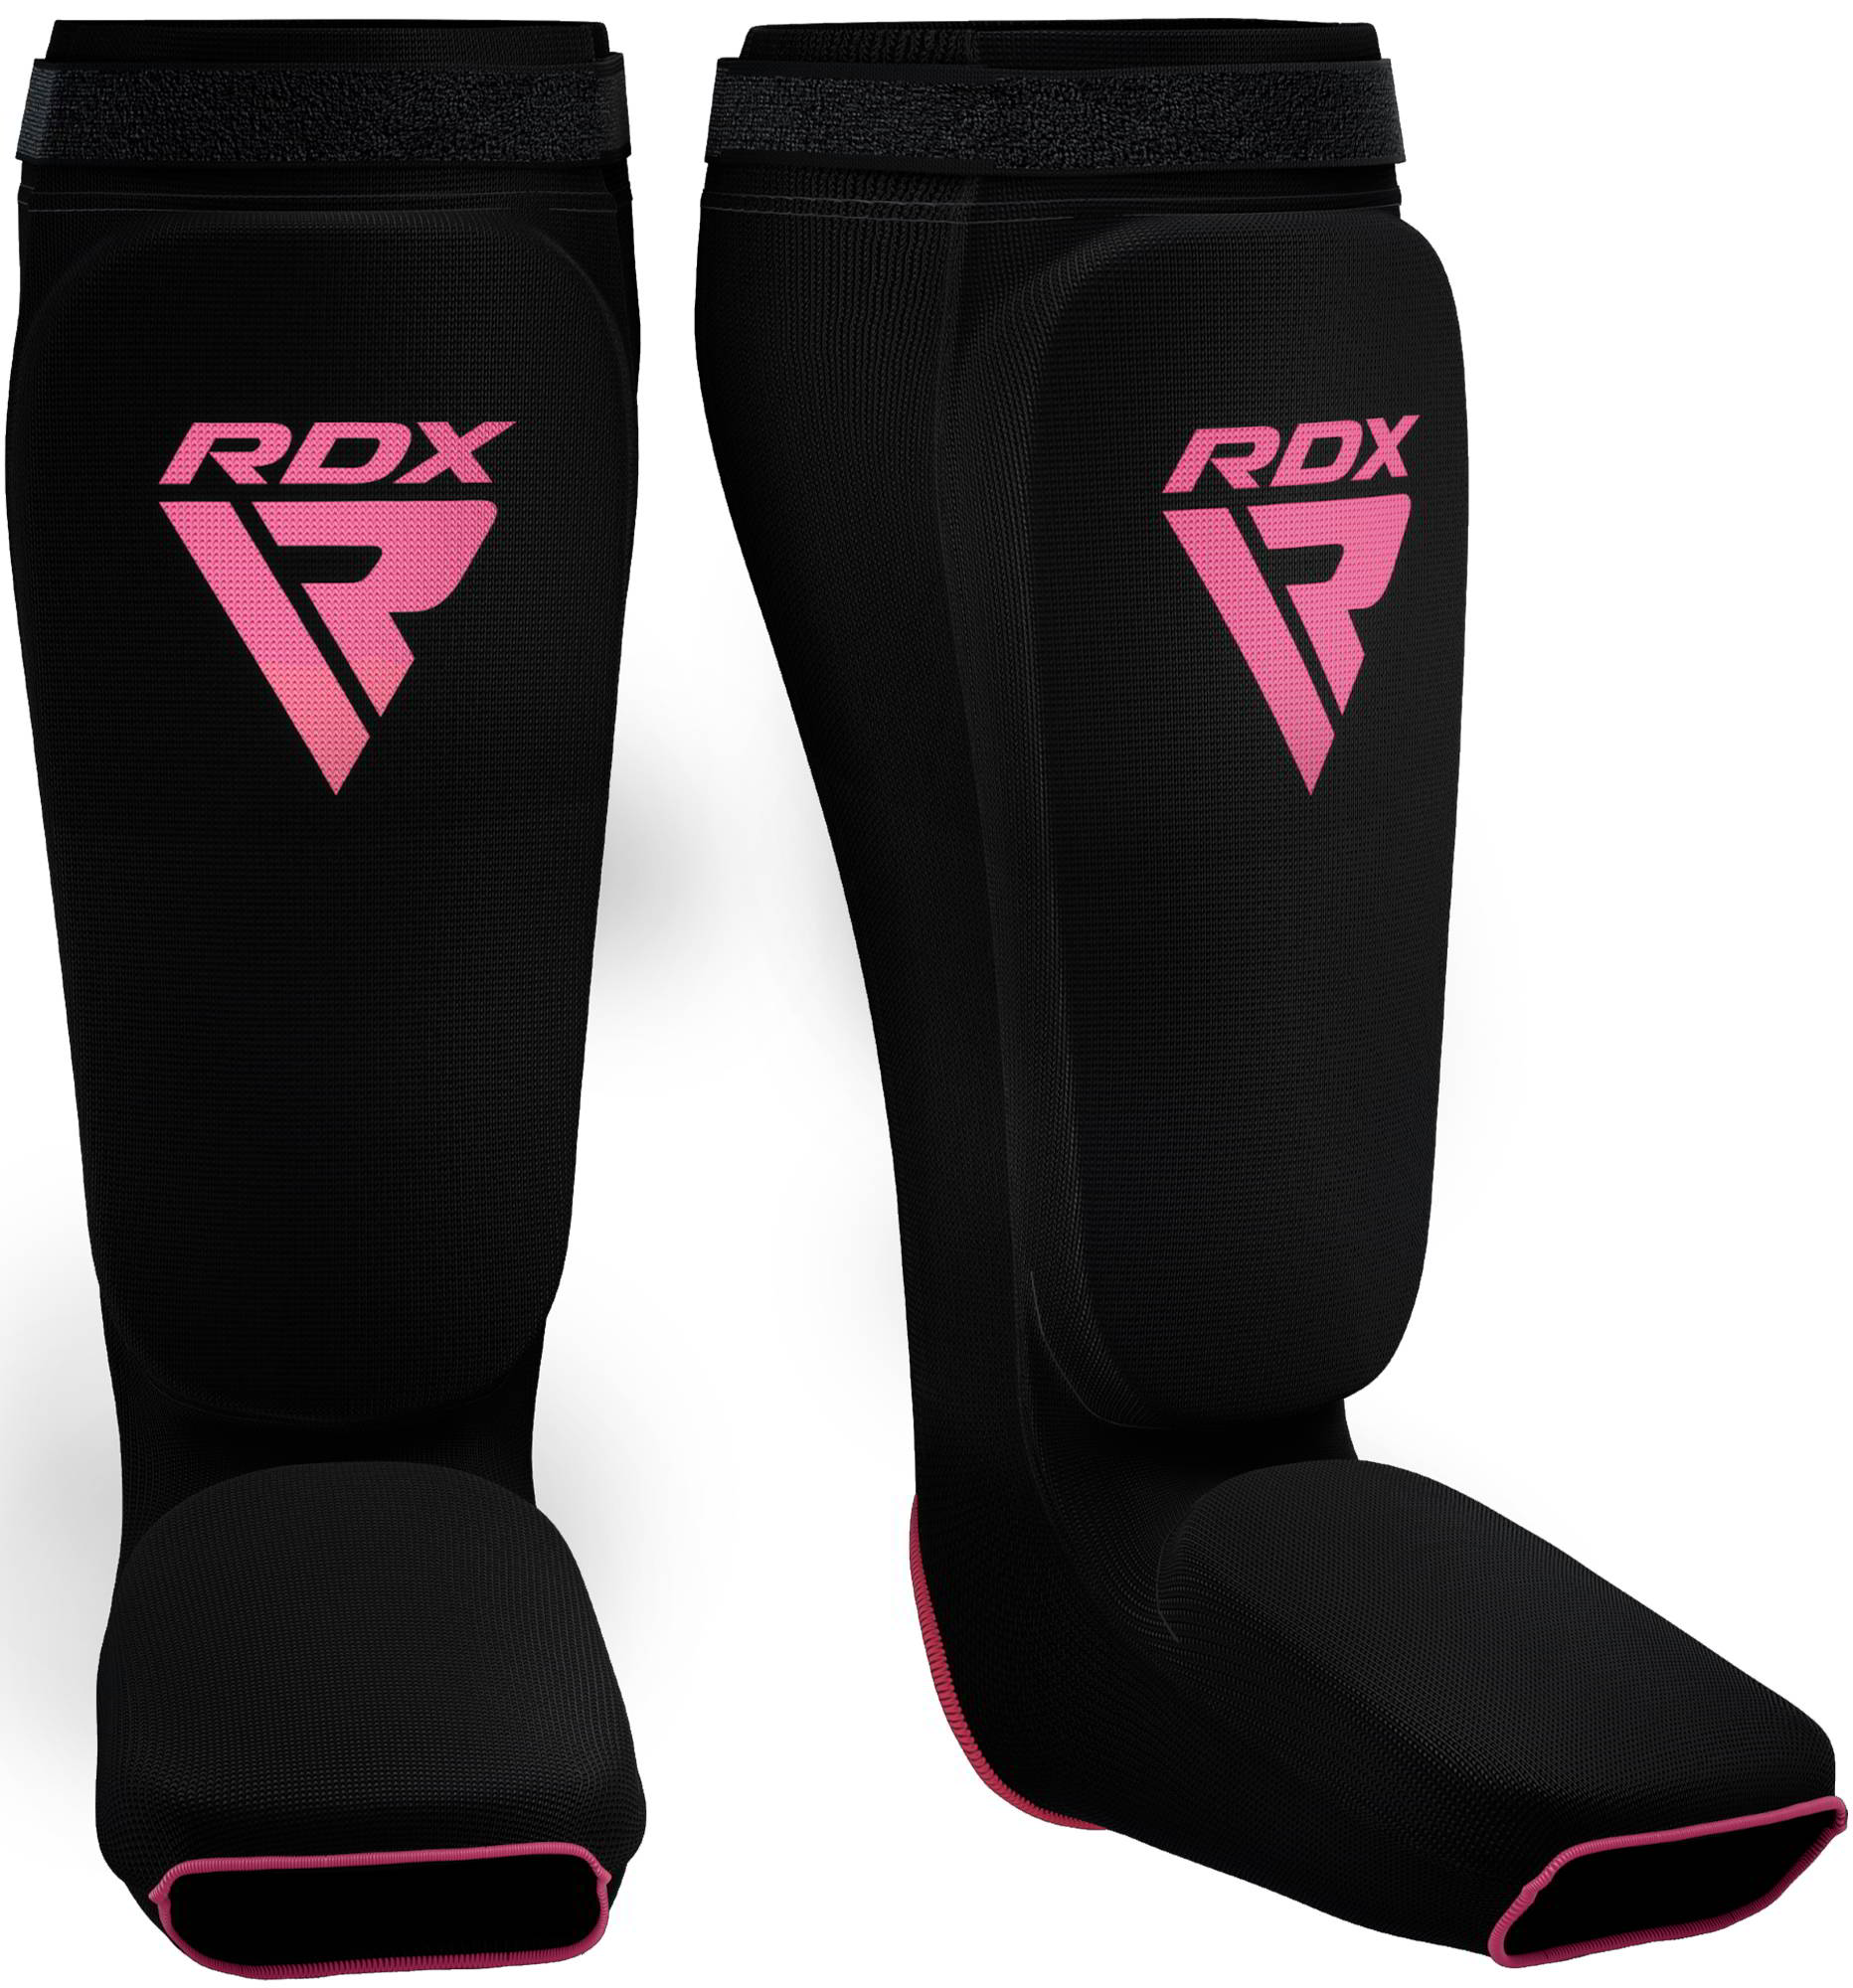 RDX SIB Espinilleras Con Empeine MMA OEKO-TEX® Standard 100 Certified Rosa L